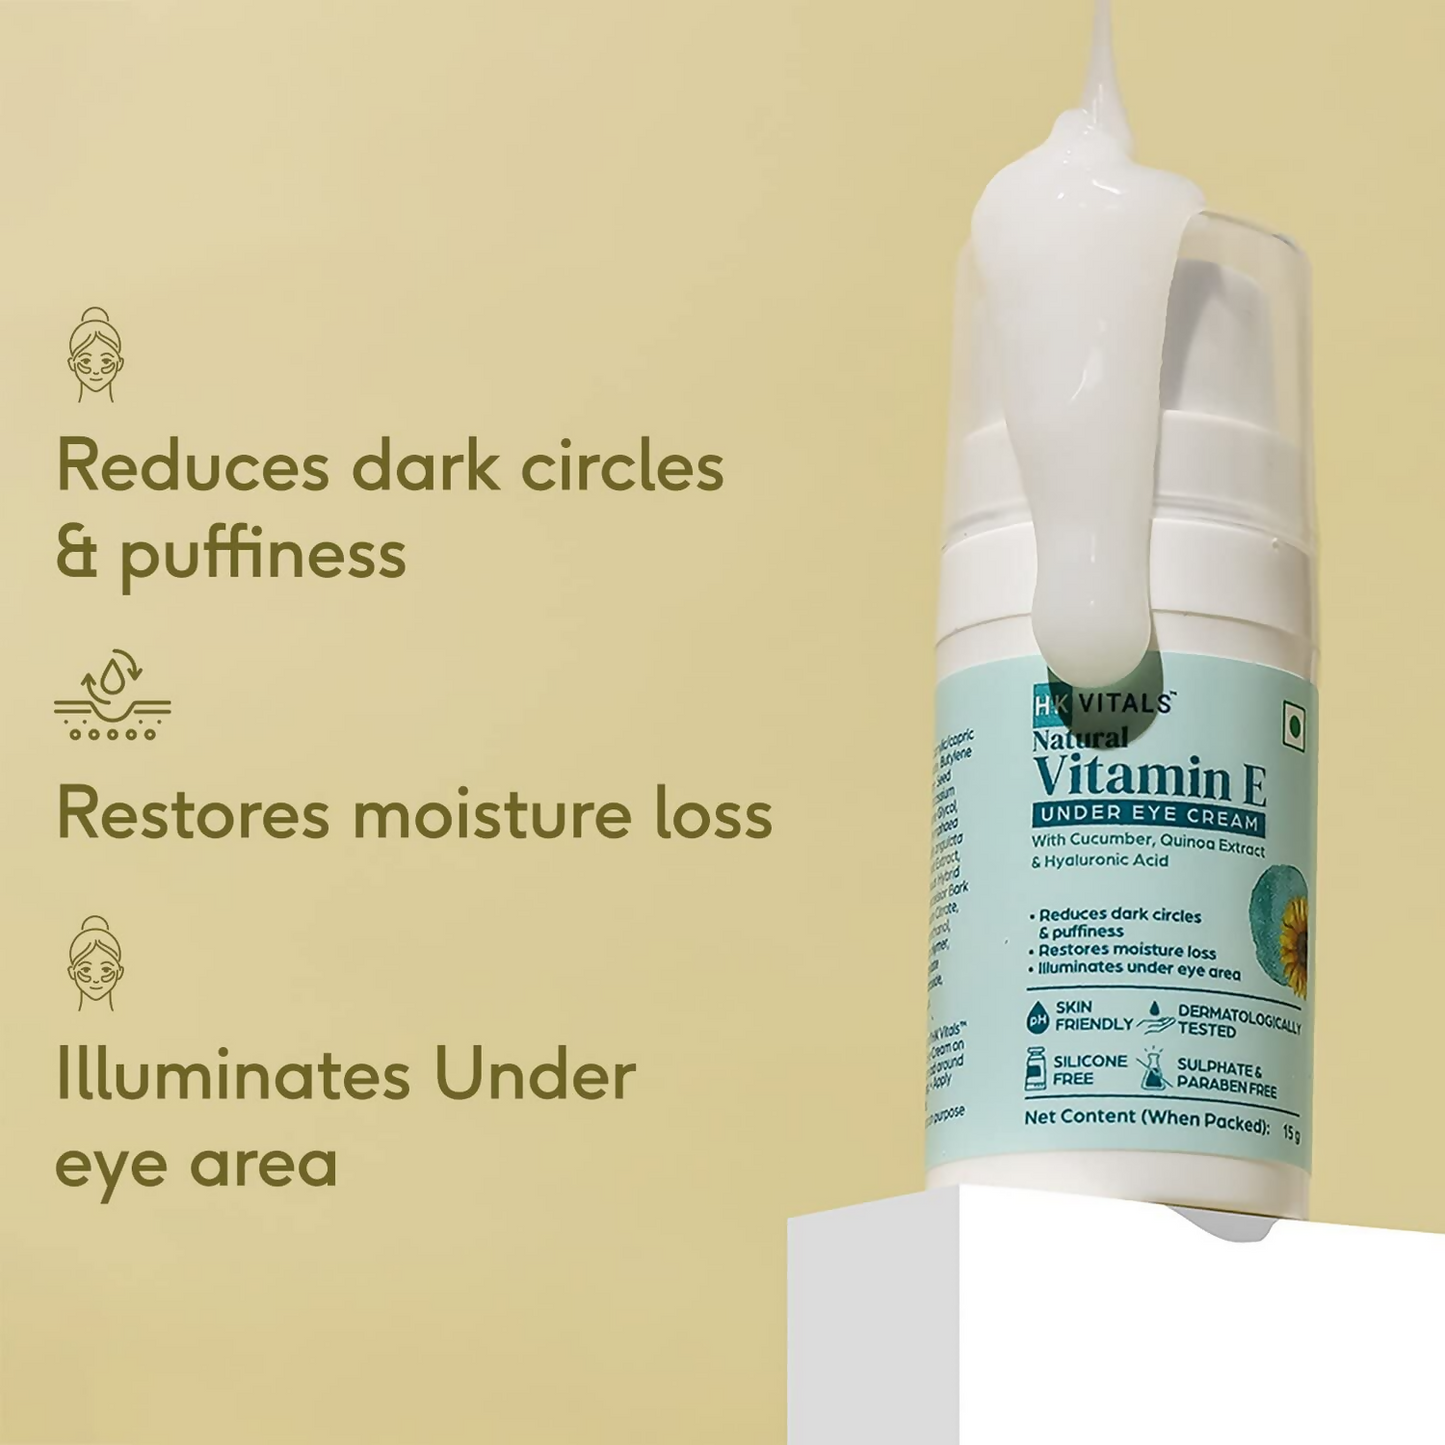 HK Vitals Vitamin E Under Eye Cream